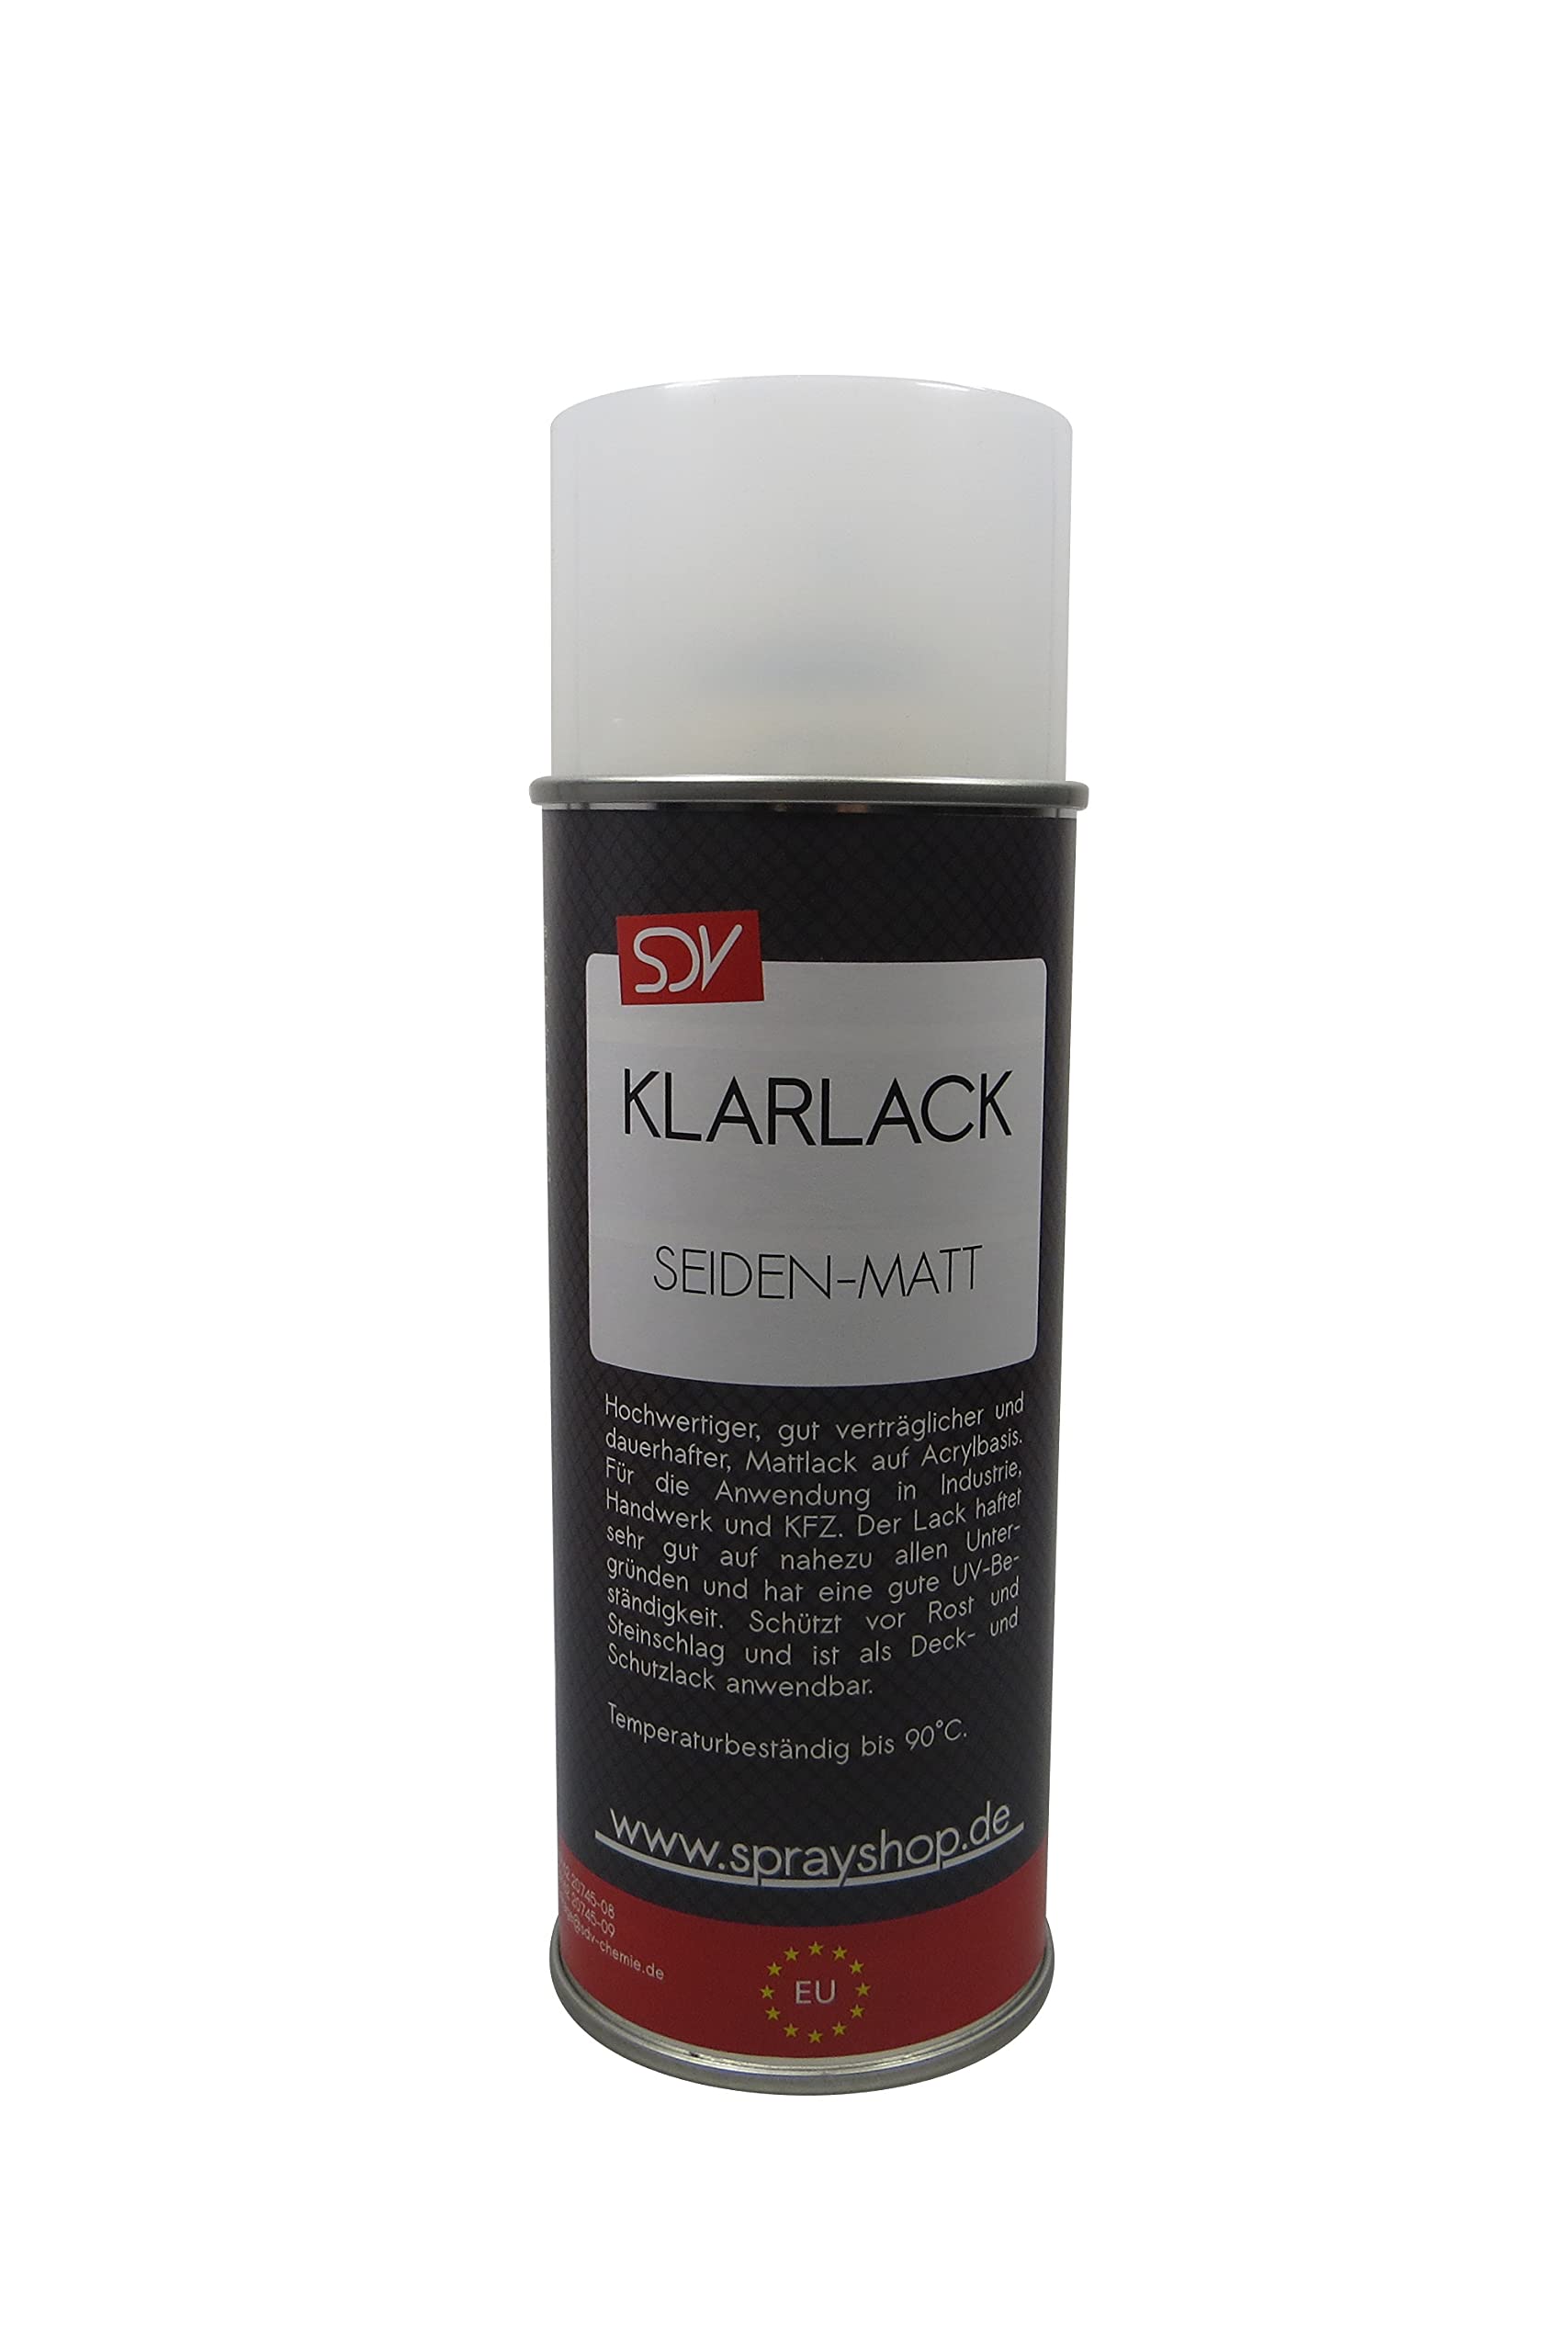 SDV Chemie Klarlack Spray seidenmatt 6x 400ml schnelltrocknend Acryl Sprühlack Autolack Felgen KFZ